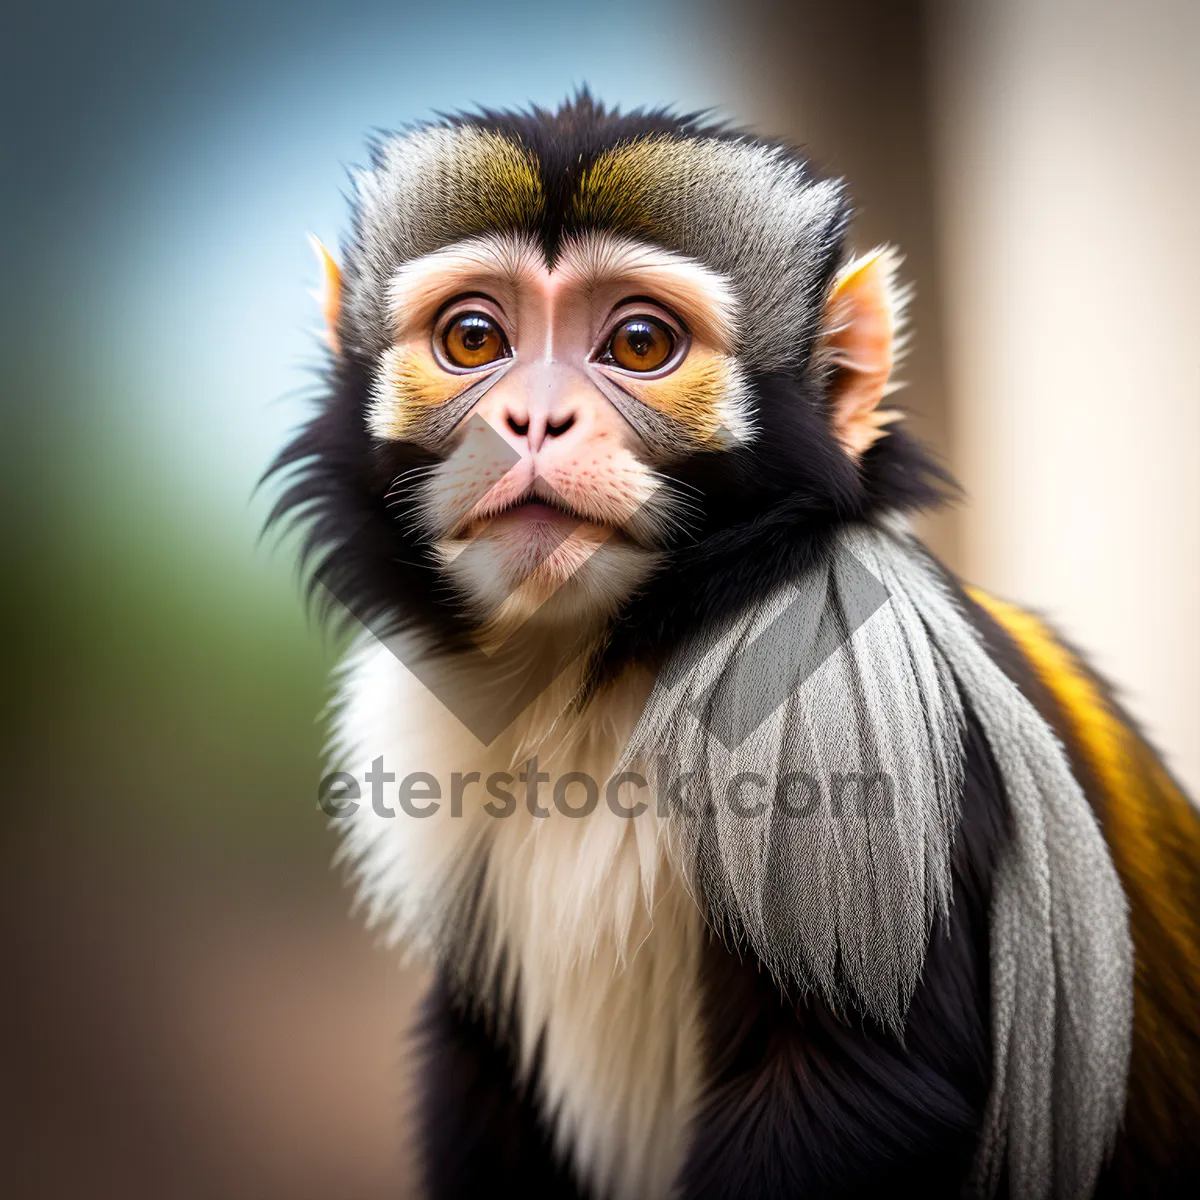 Picture of Mystic Baby Primate in Wild Jungle